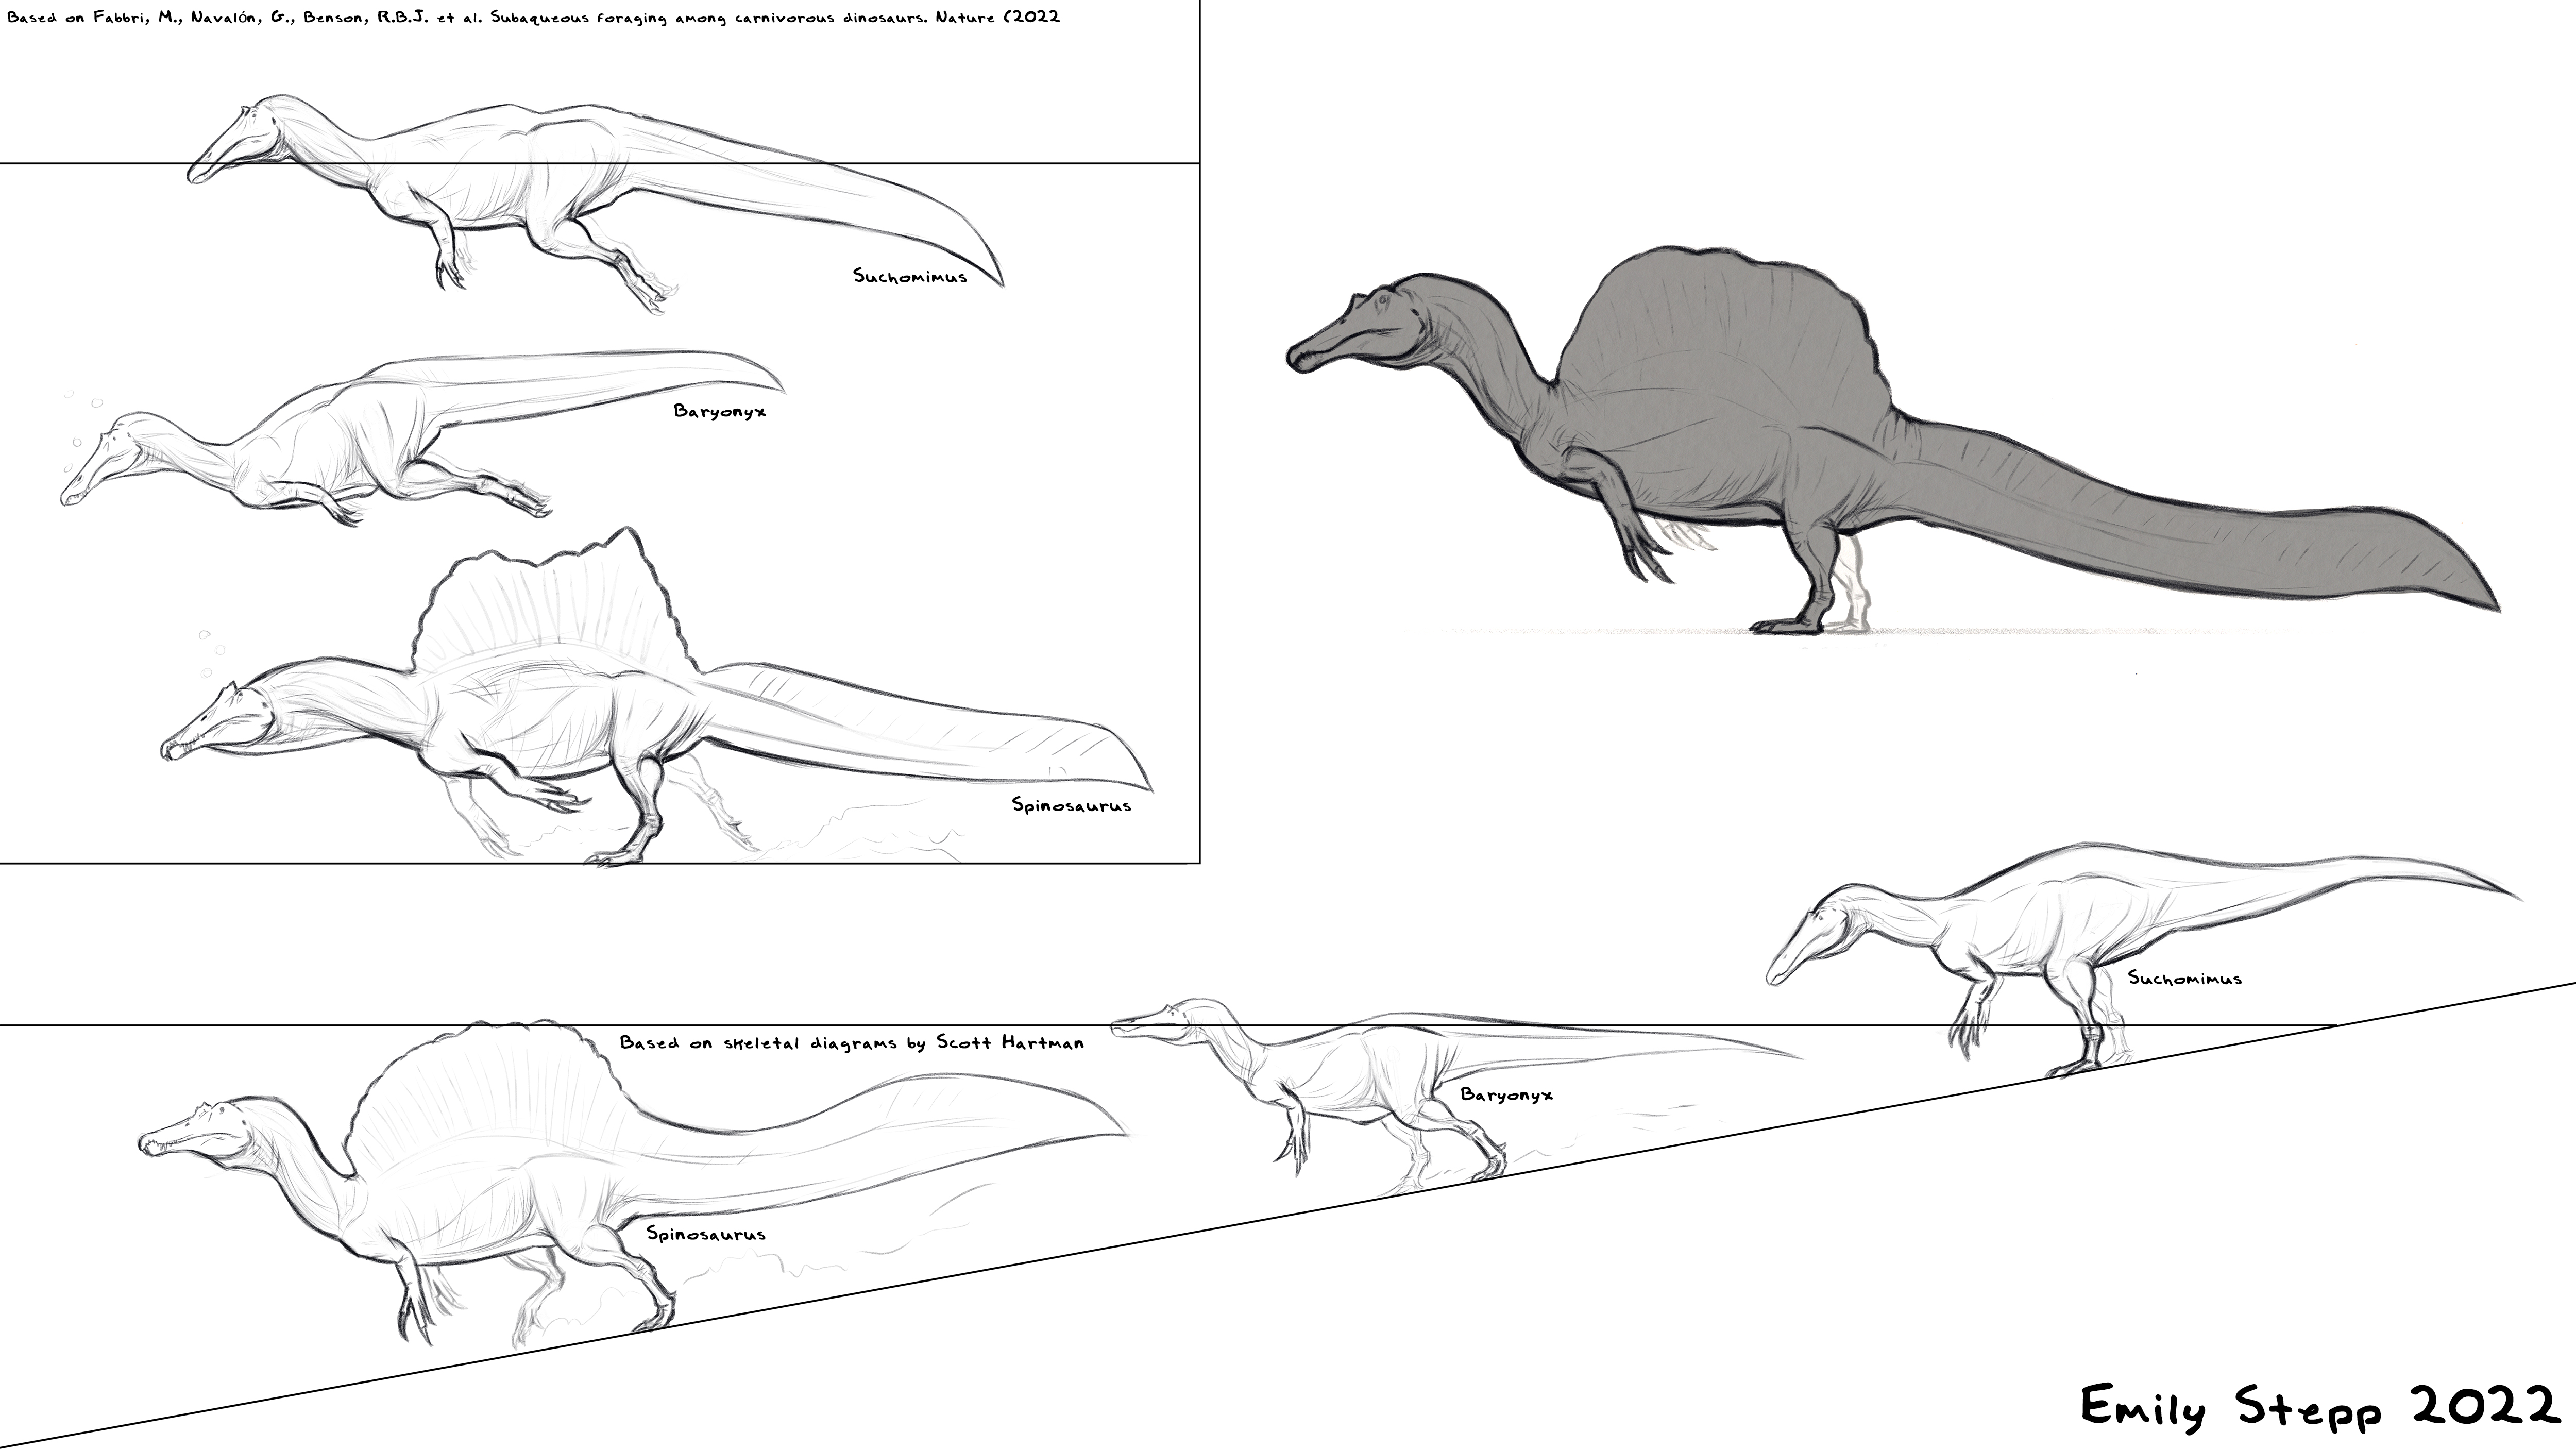 Spinosaur comparisons